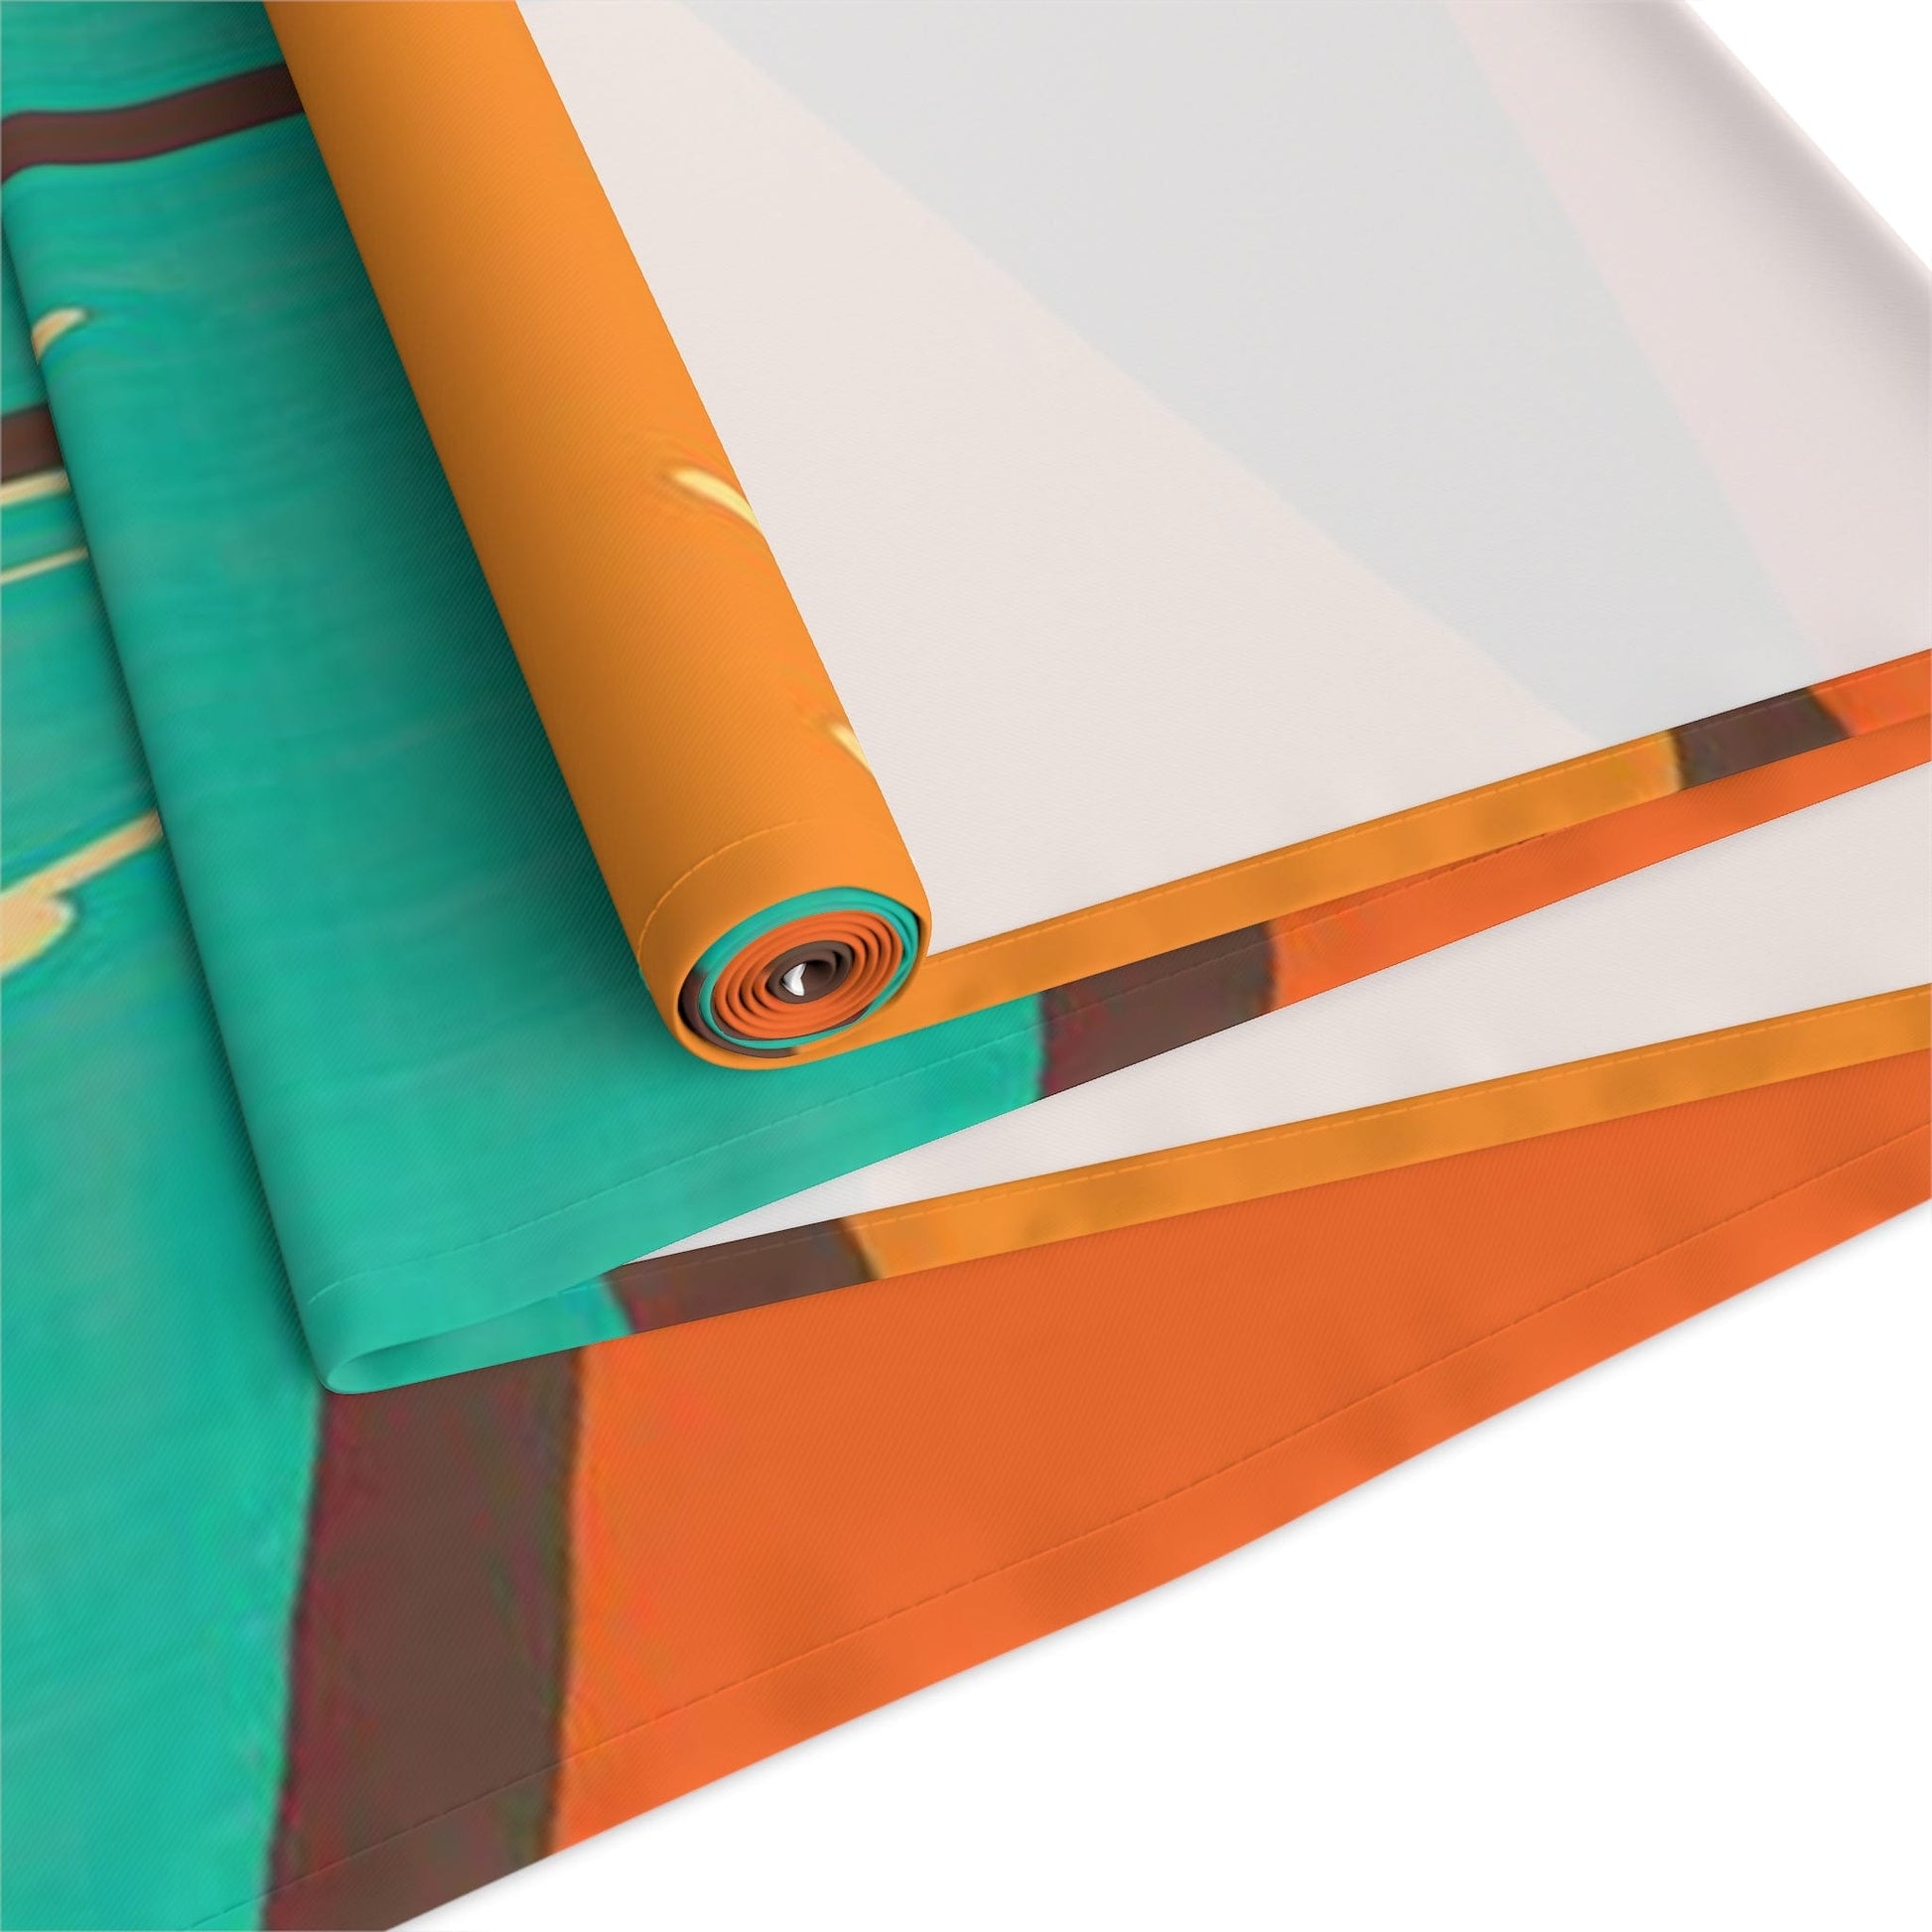 Midcentury Modern Retro Atomic Dots Teal Orange Wrapping Paper Sheets, Zazzle